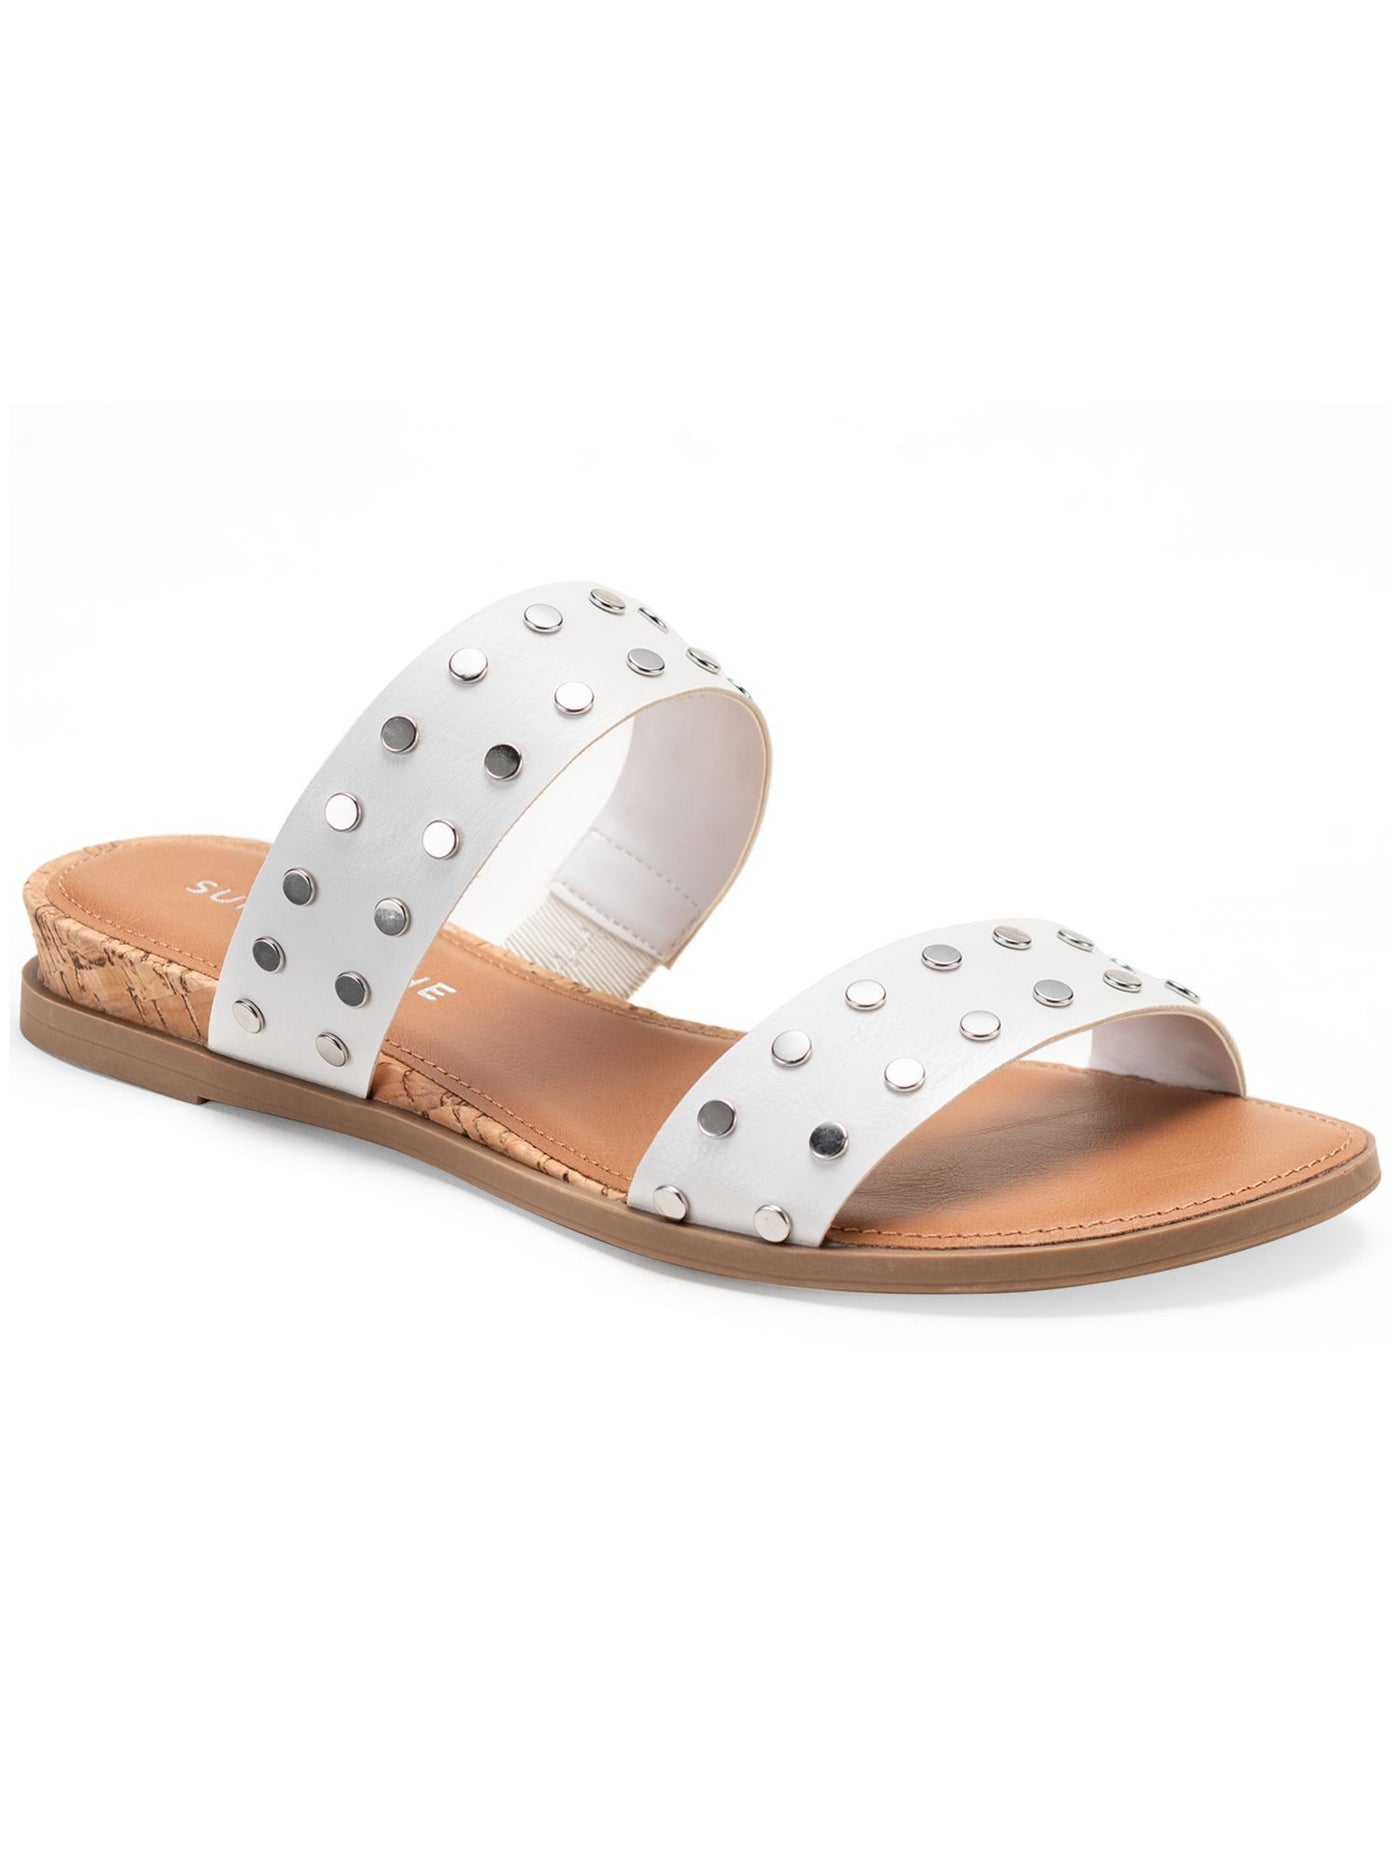 SUN STONE Womens White Cushioned Comfort Studded Slip Resistant Easten Round Toe Wedge Slip On Slide Sandals Shoes 9.5 M